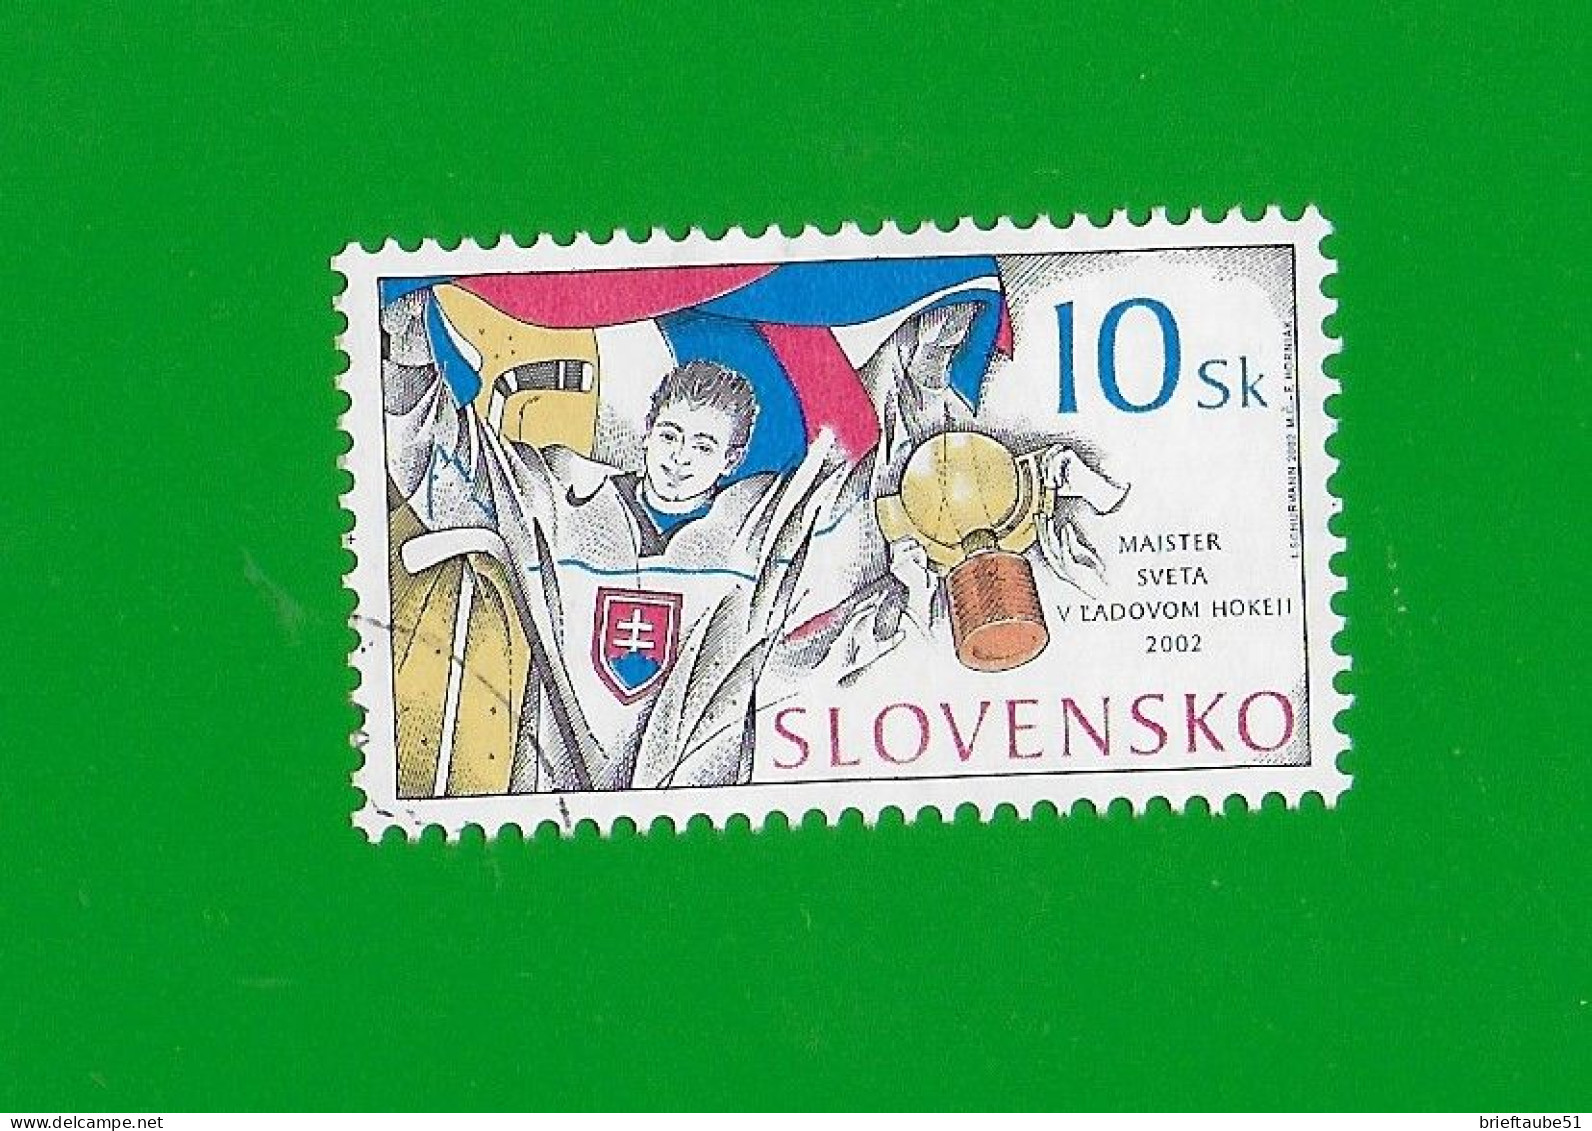 SLOVAKIA REPUBLIC 2002 Gestempelt°Used/Bedarf  MiNr. 432  #  "Eishockey - WM In Schweden # Goldmedaille" - Oblitérés